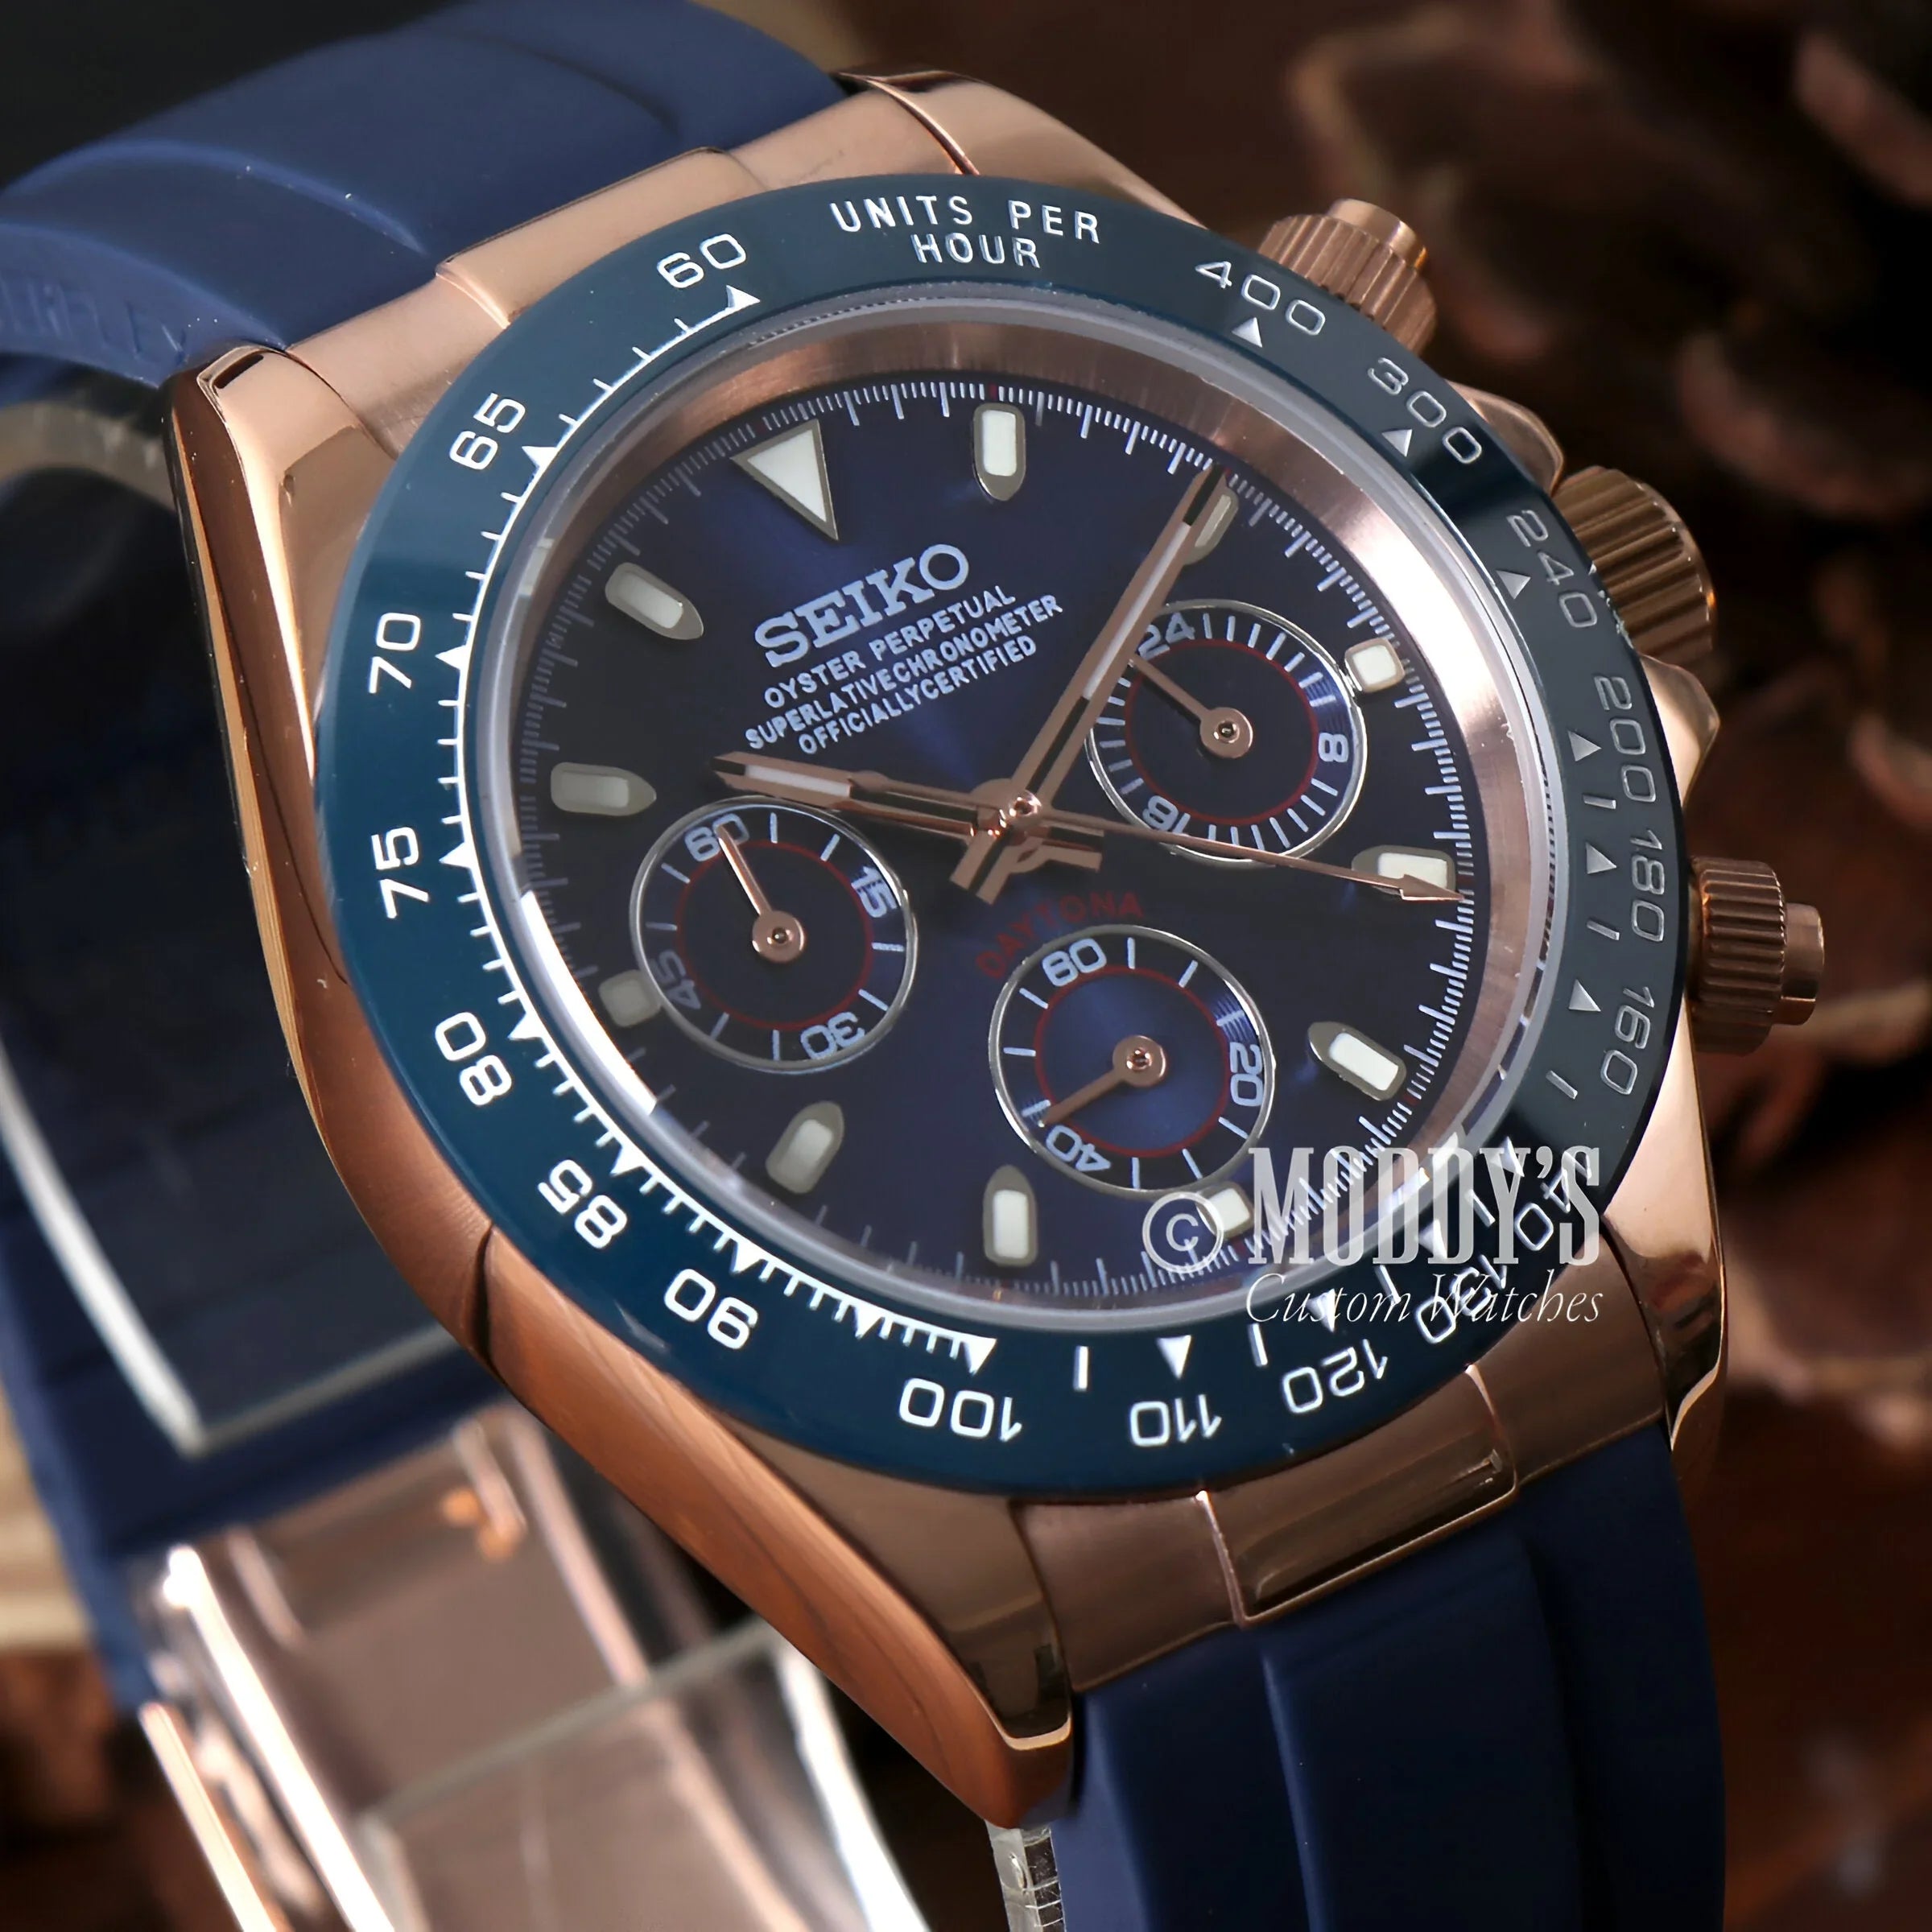 Omega Seitona Royal Blue Watch Featuring a Stunning Blue Dial - Seiko Mod Daytona Style